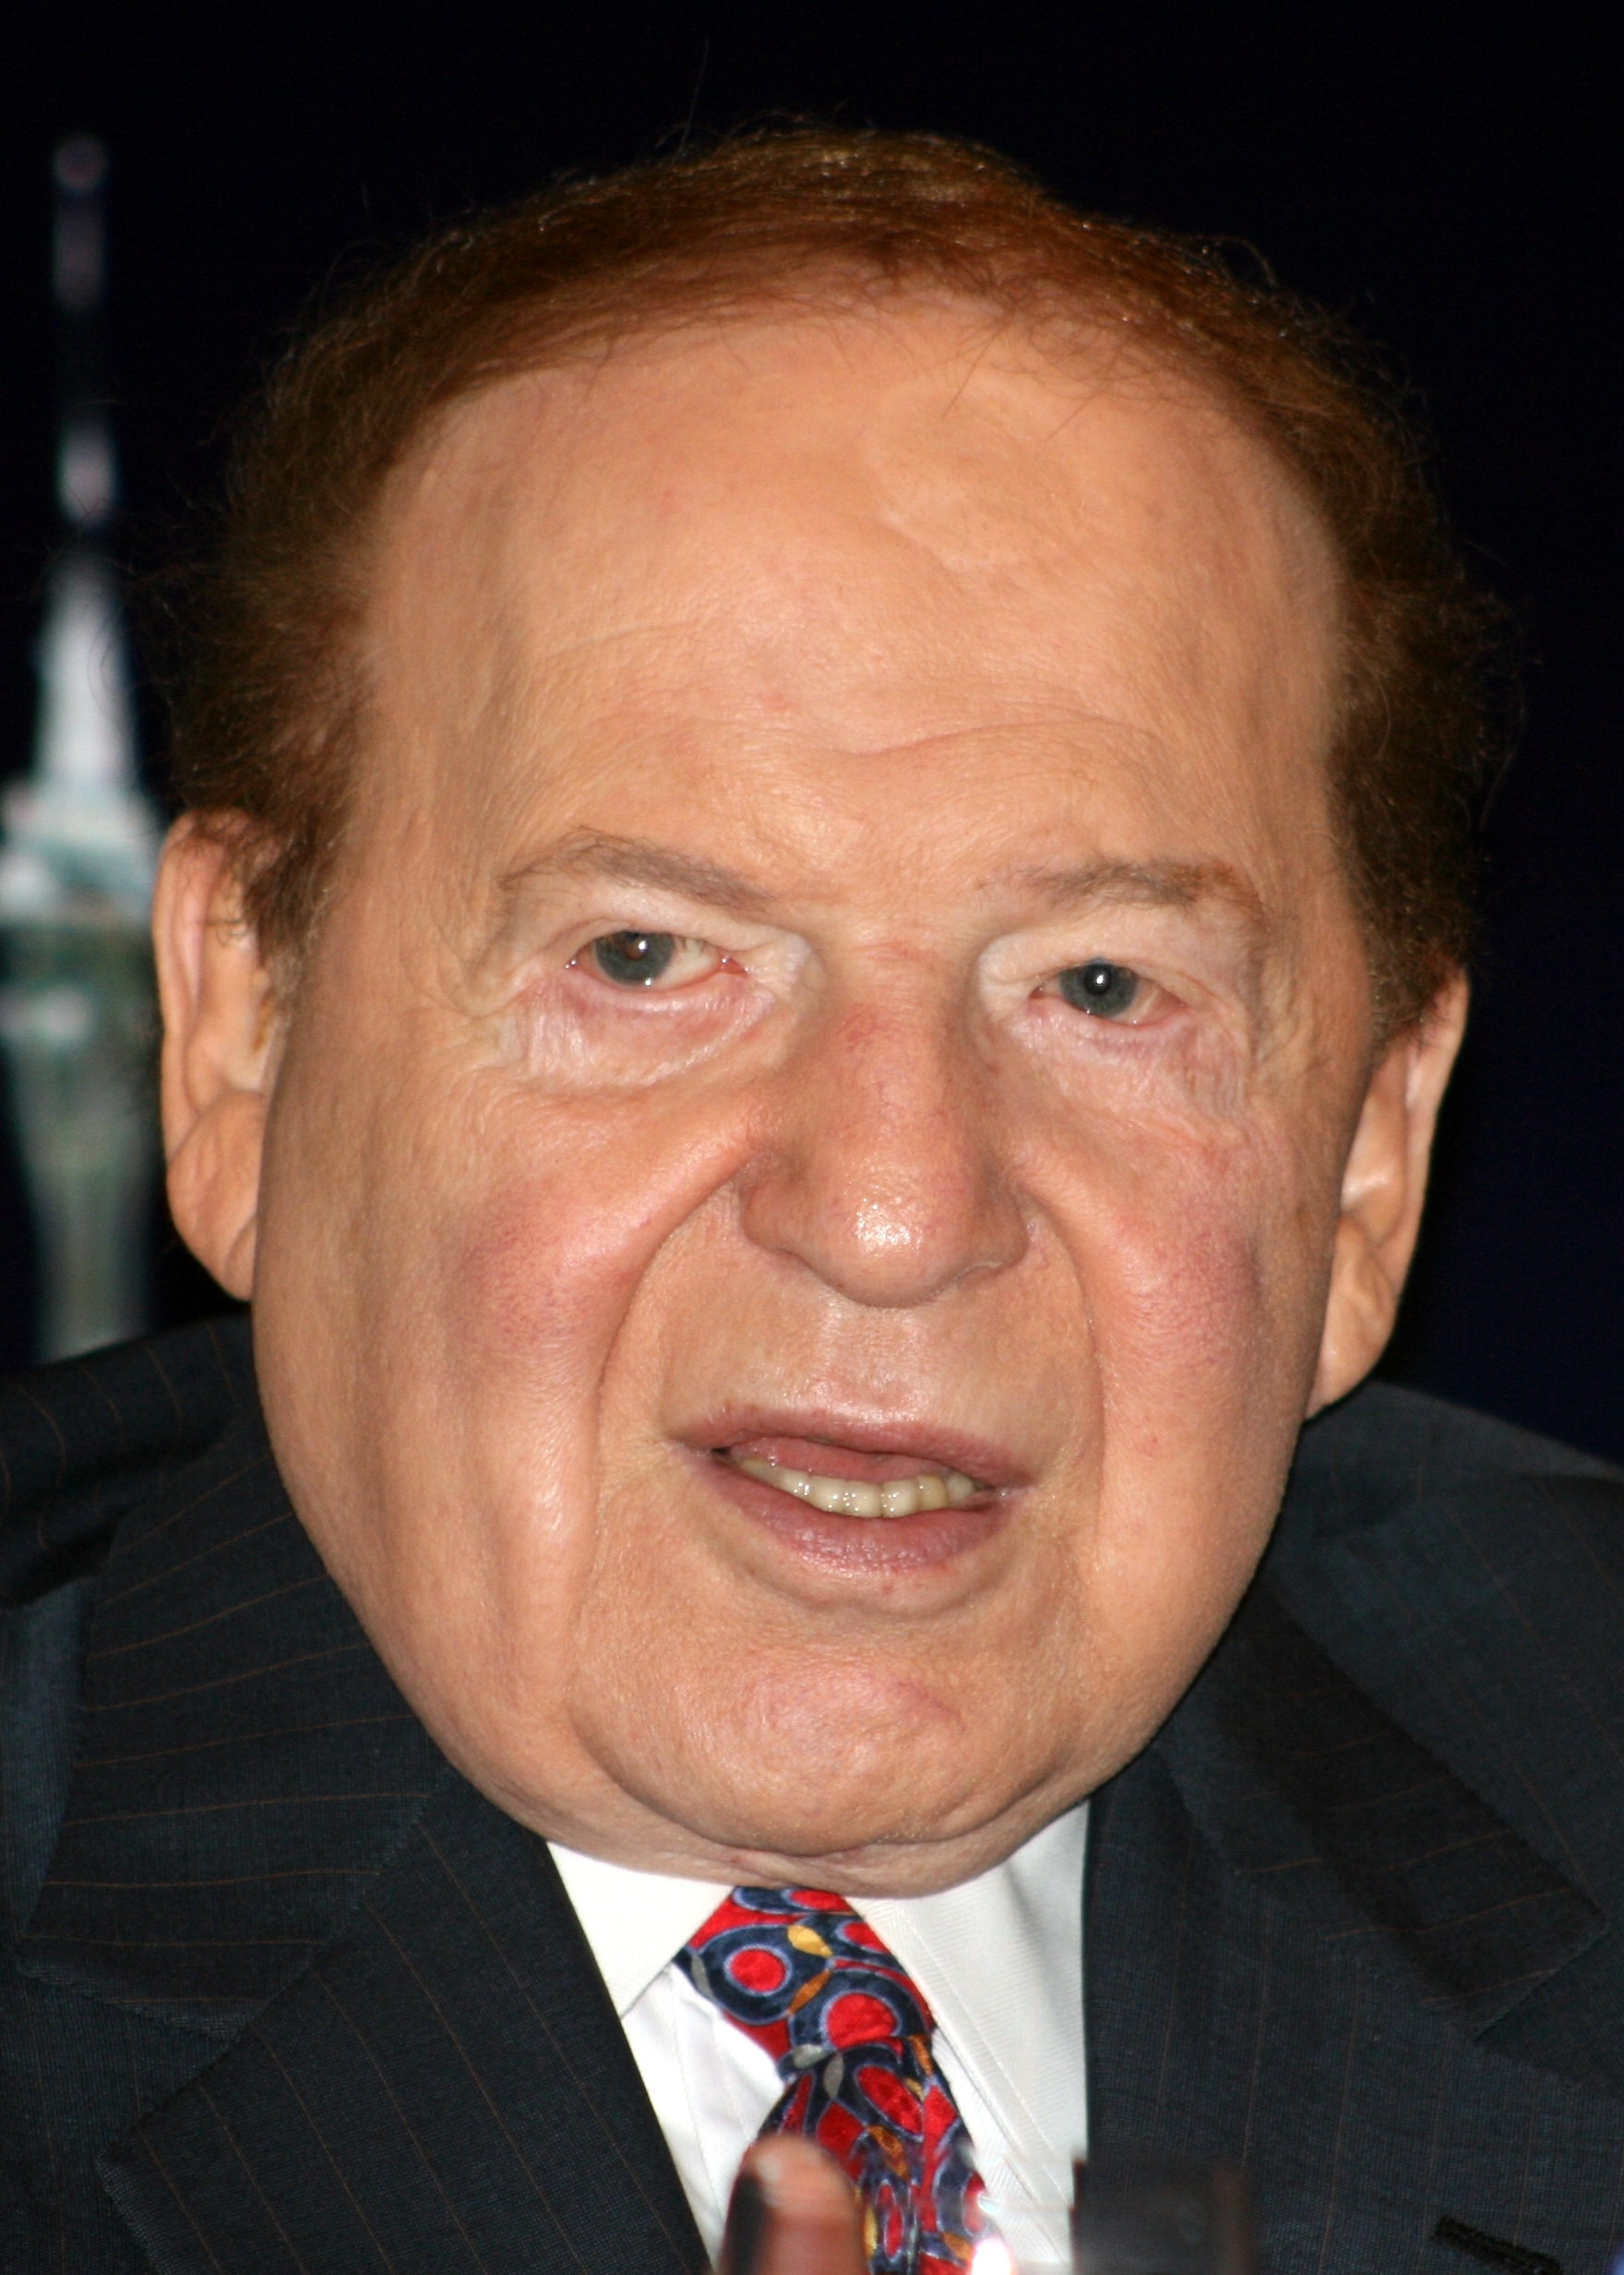 Jewish casino billionaire is major Trump donor: Stop enabling bigots, Sheldon Adelson